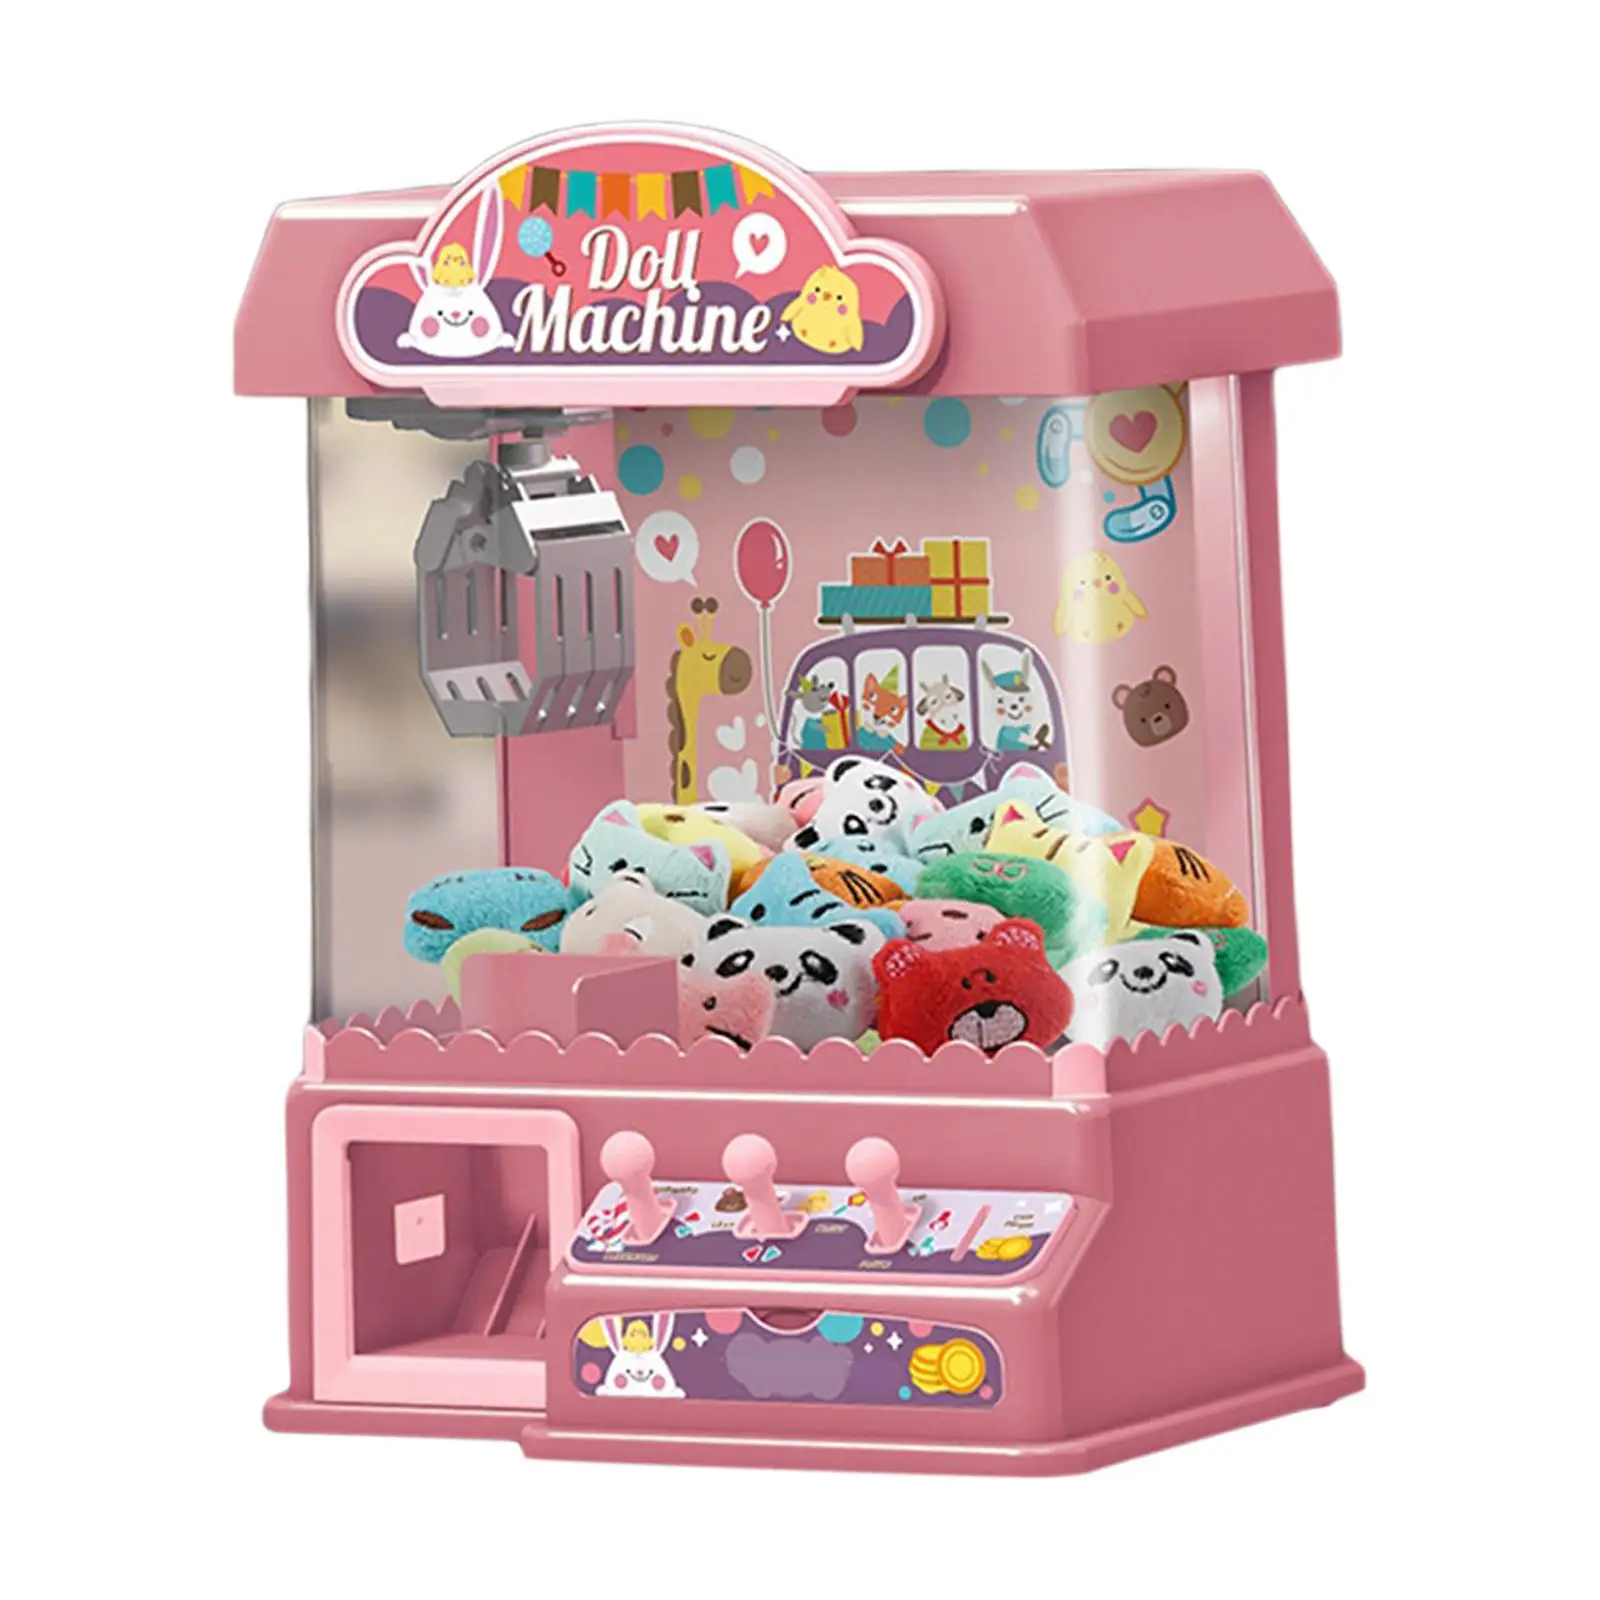 Claw Machine Practical DIY Doll Claw Machine Toy for Birthday Party Festival